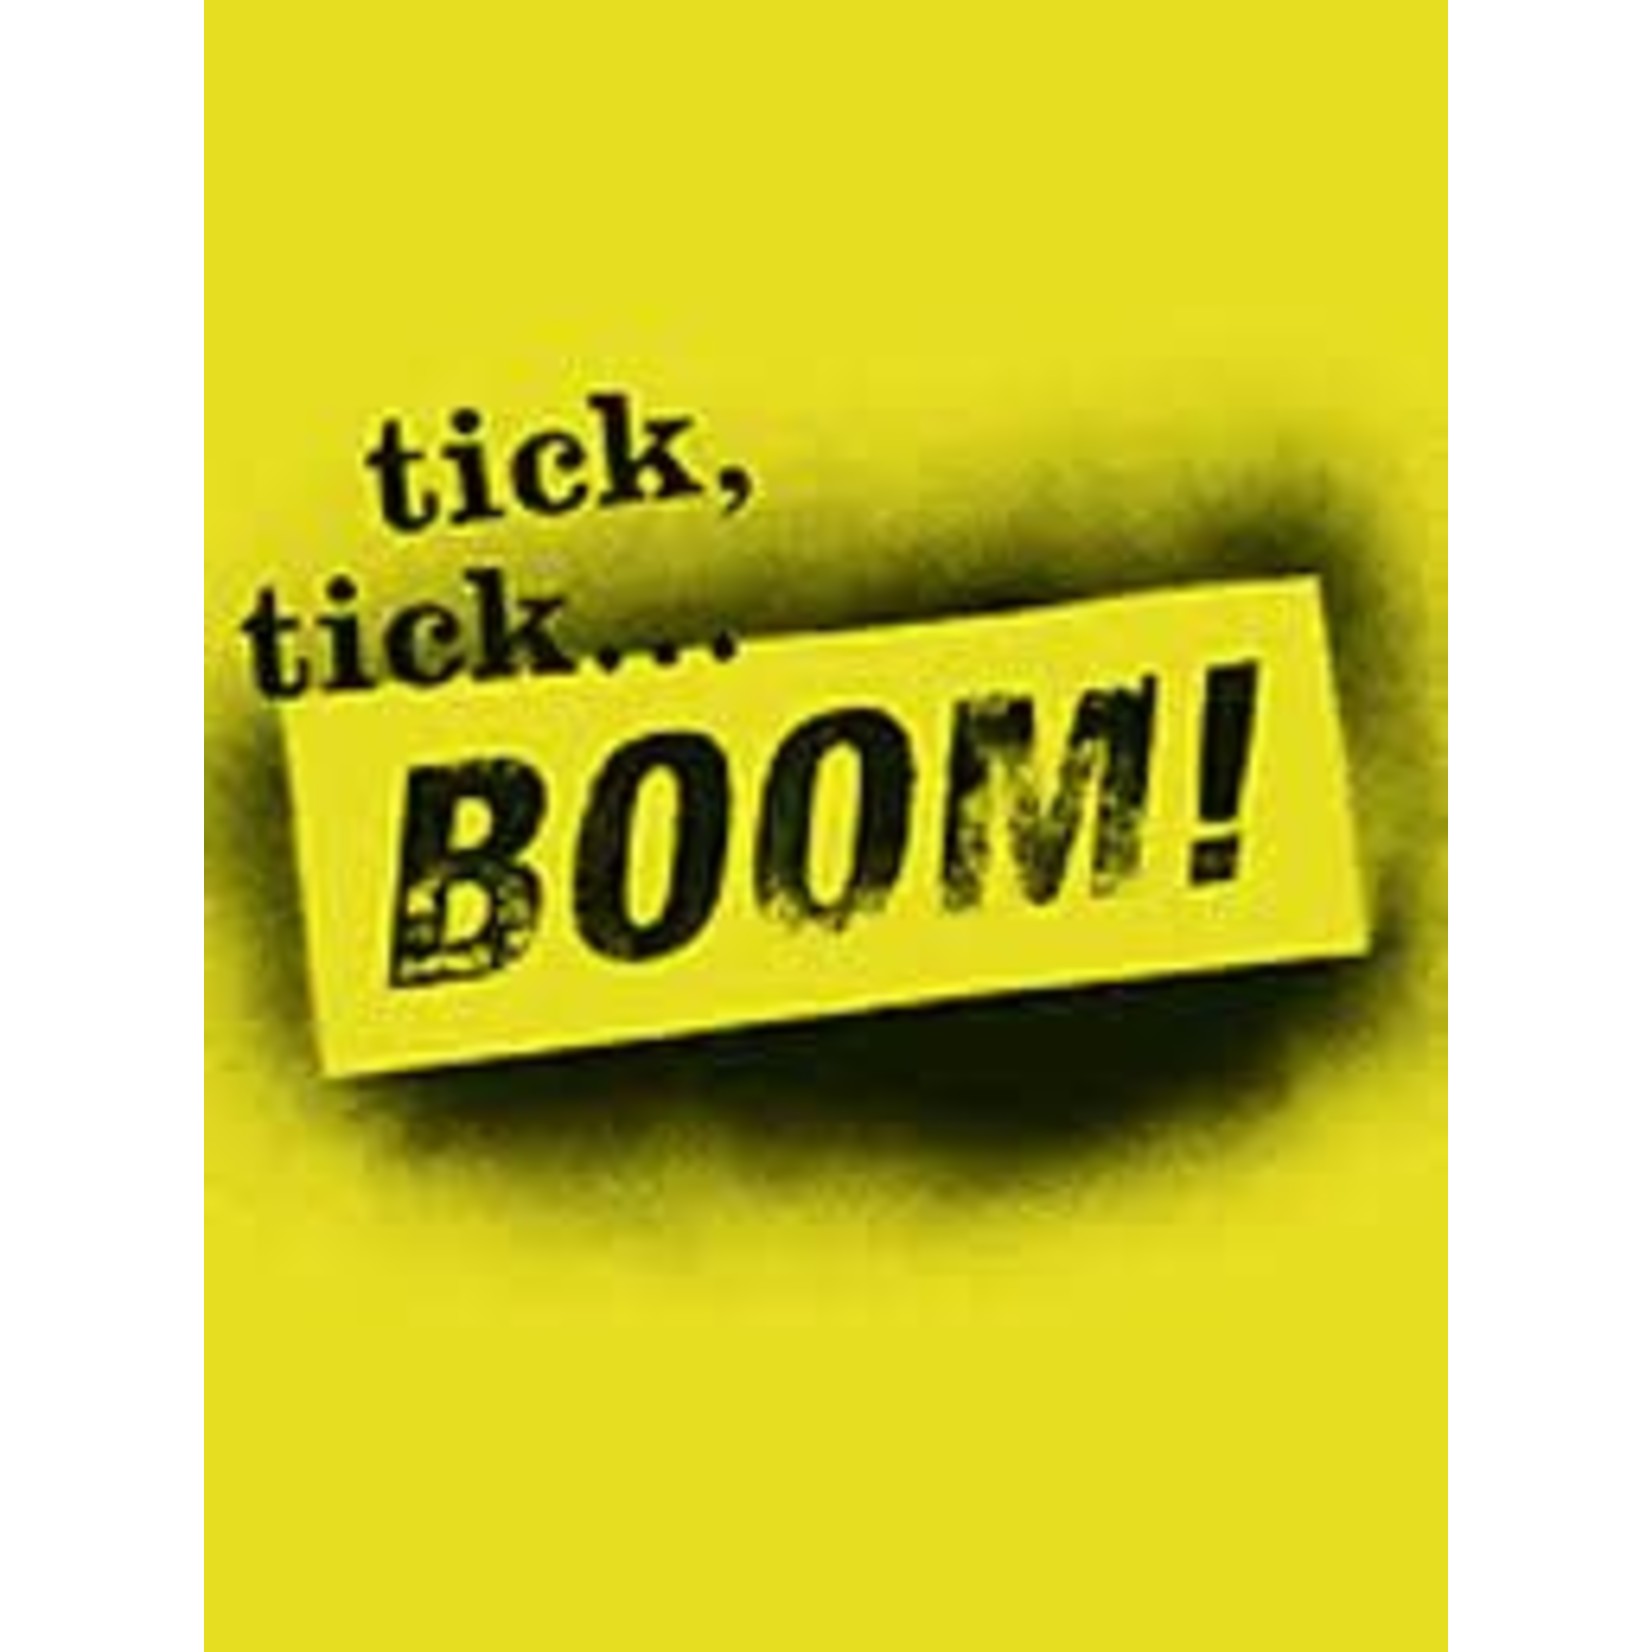 Schaumburg On Stage- "Tick Tick Boom" Schaumburg On Stage -$27.00 Single General Admissions- "Tick Tick Boom" FRI 3/24 @7:30,